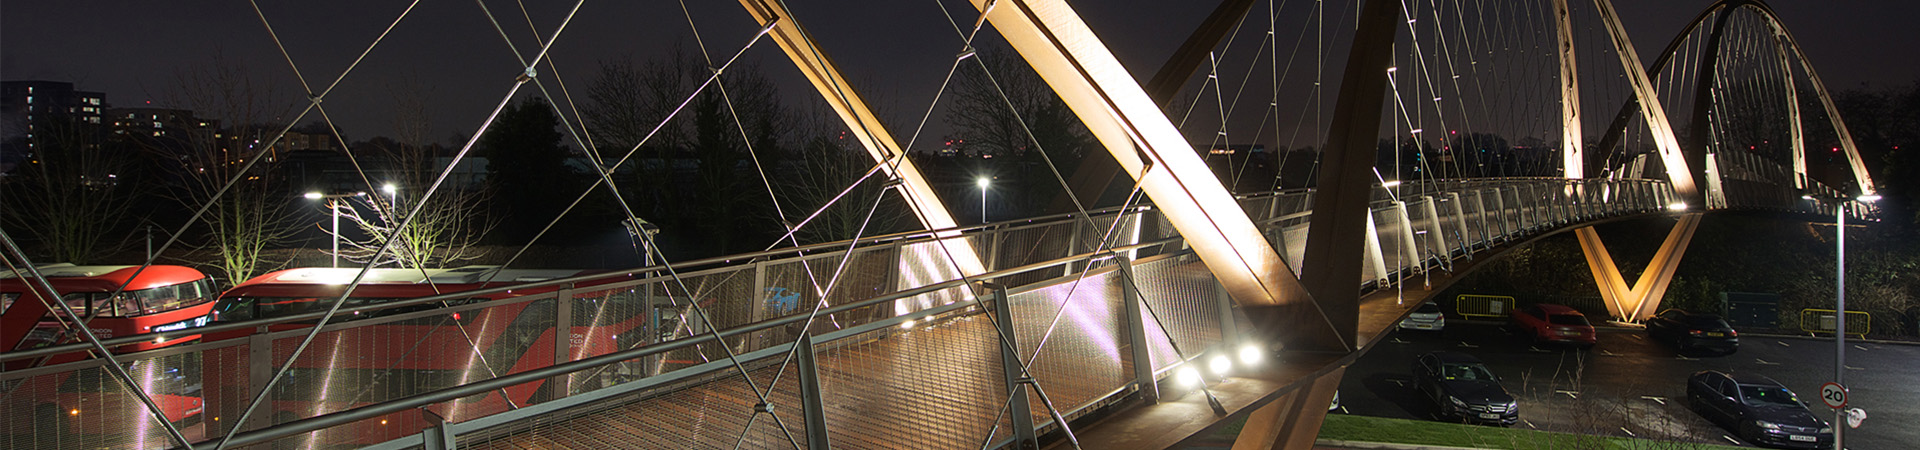 Steel bridge at night